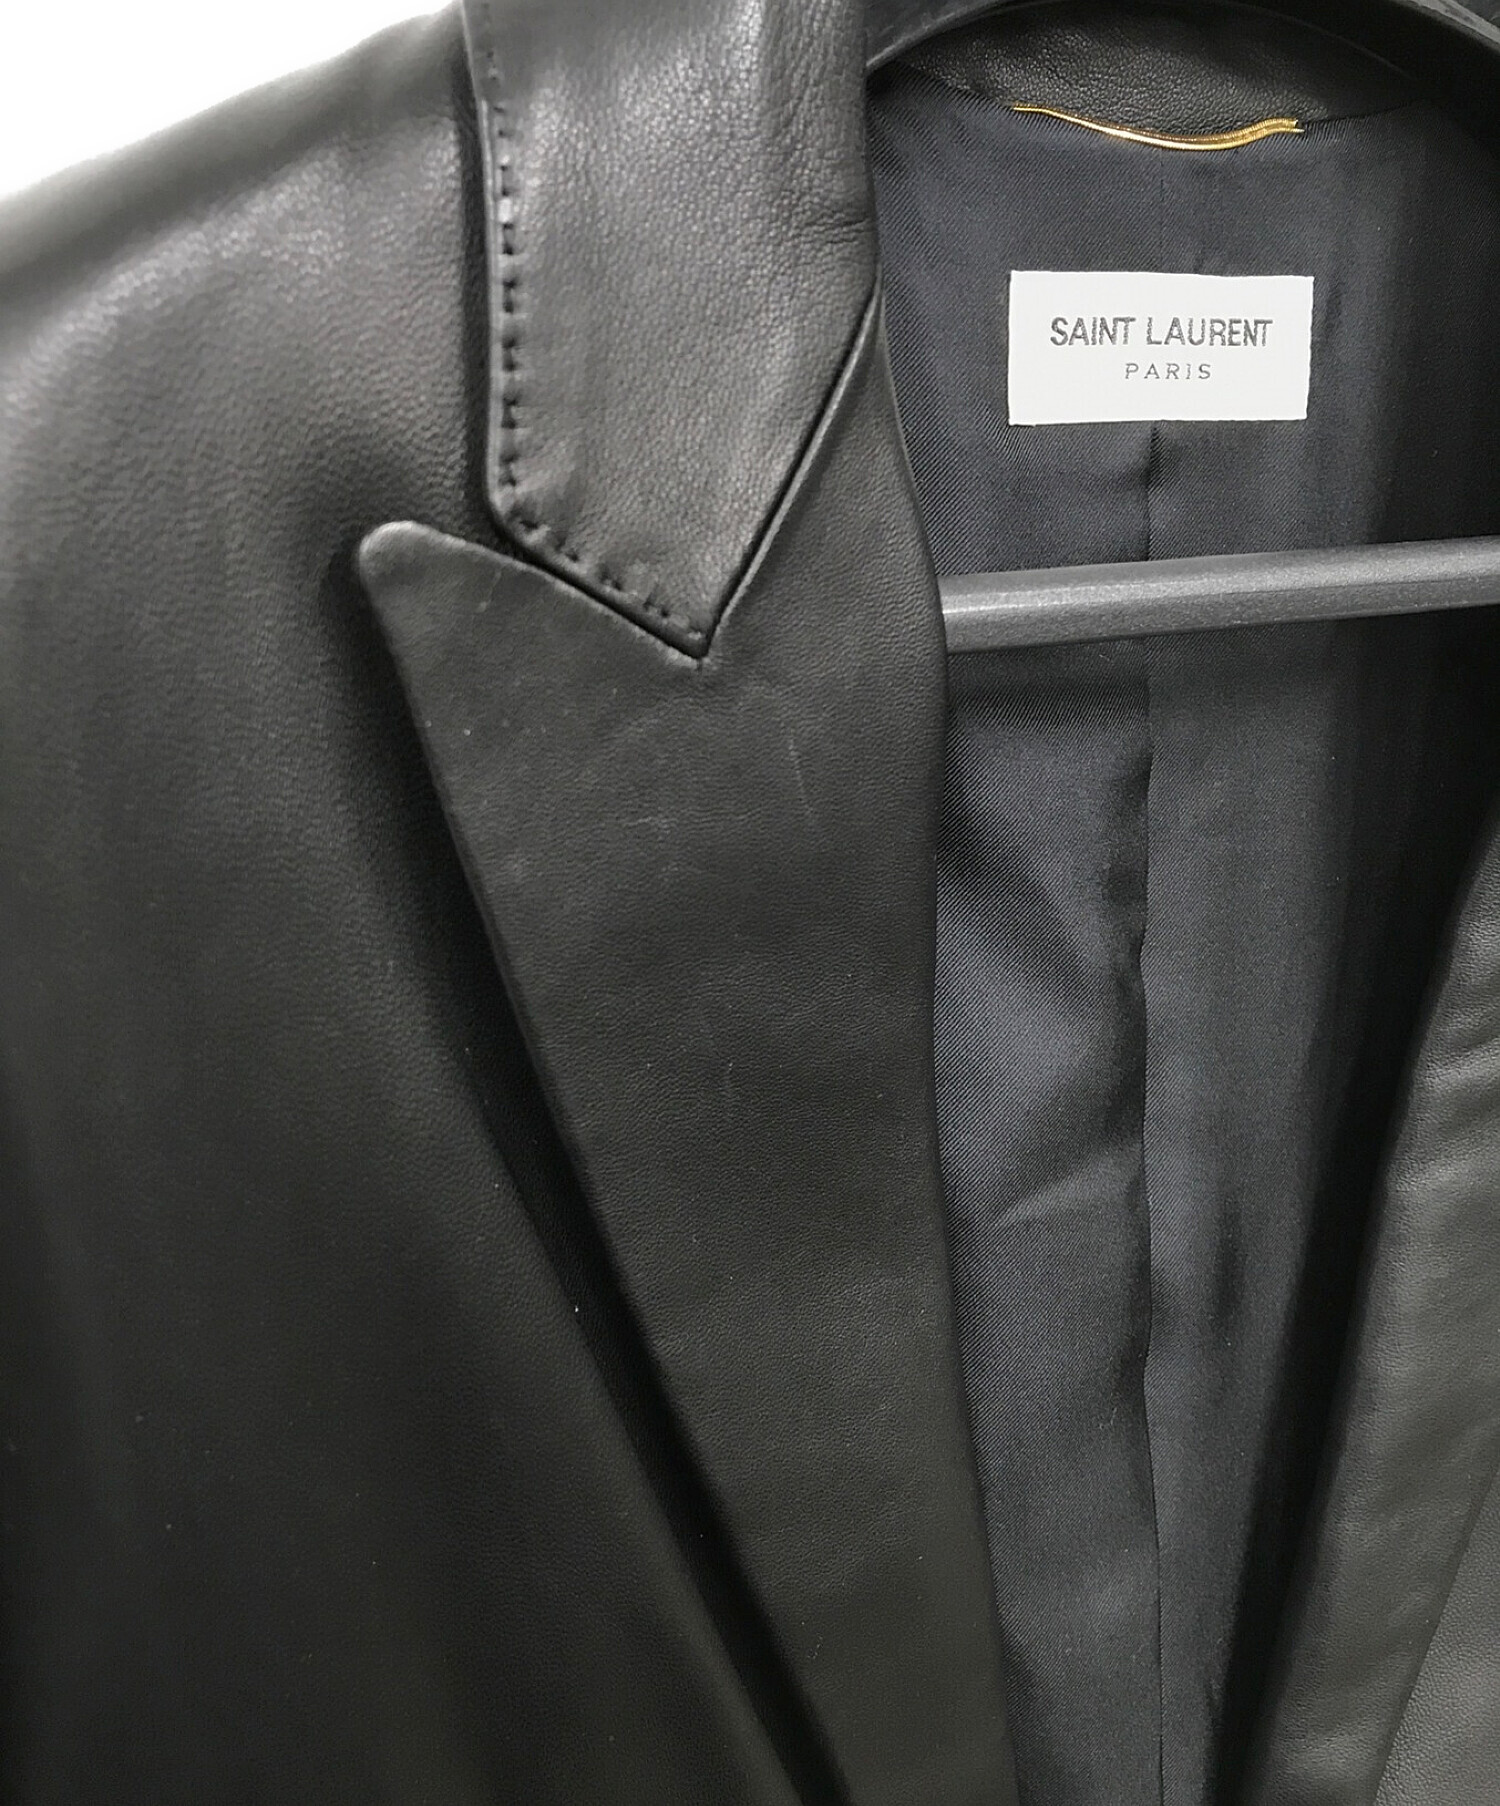 Saint Laurent Paris (サンローランパリ) カウレザーテーラードジャケット ブラック サイズ:38